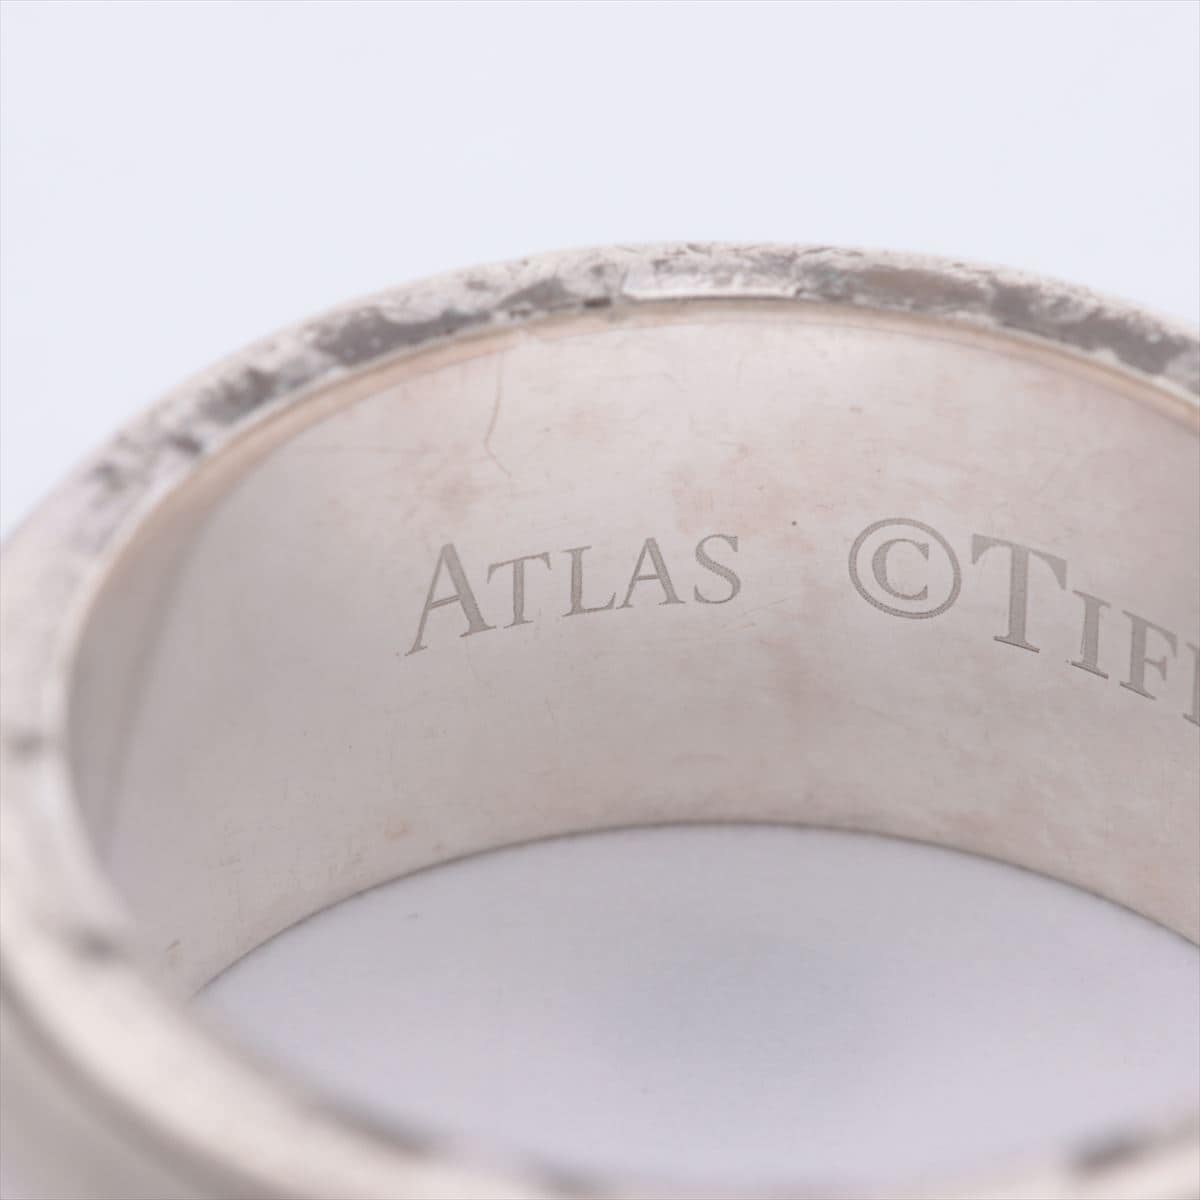 Tiffany Atlas rings 925 7.6g Silver